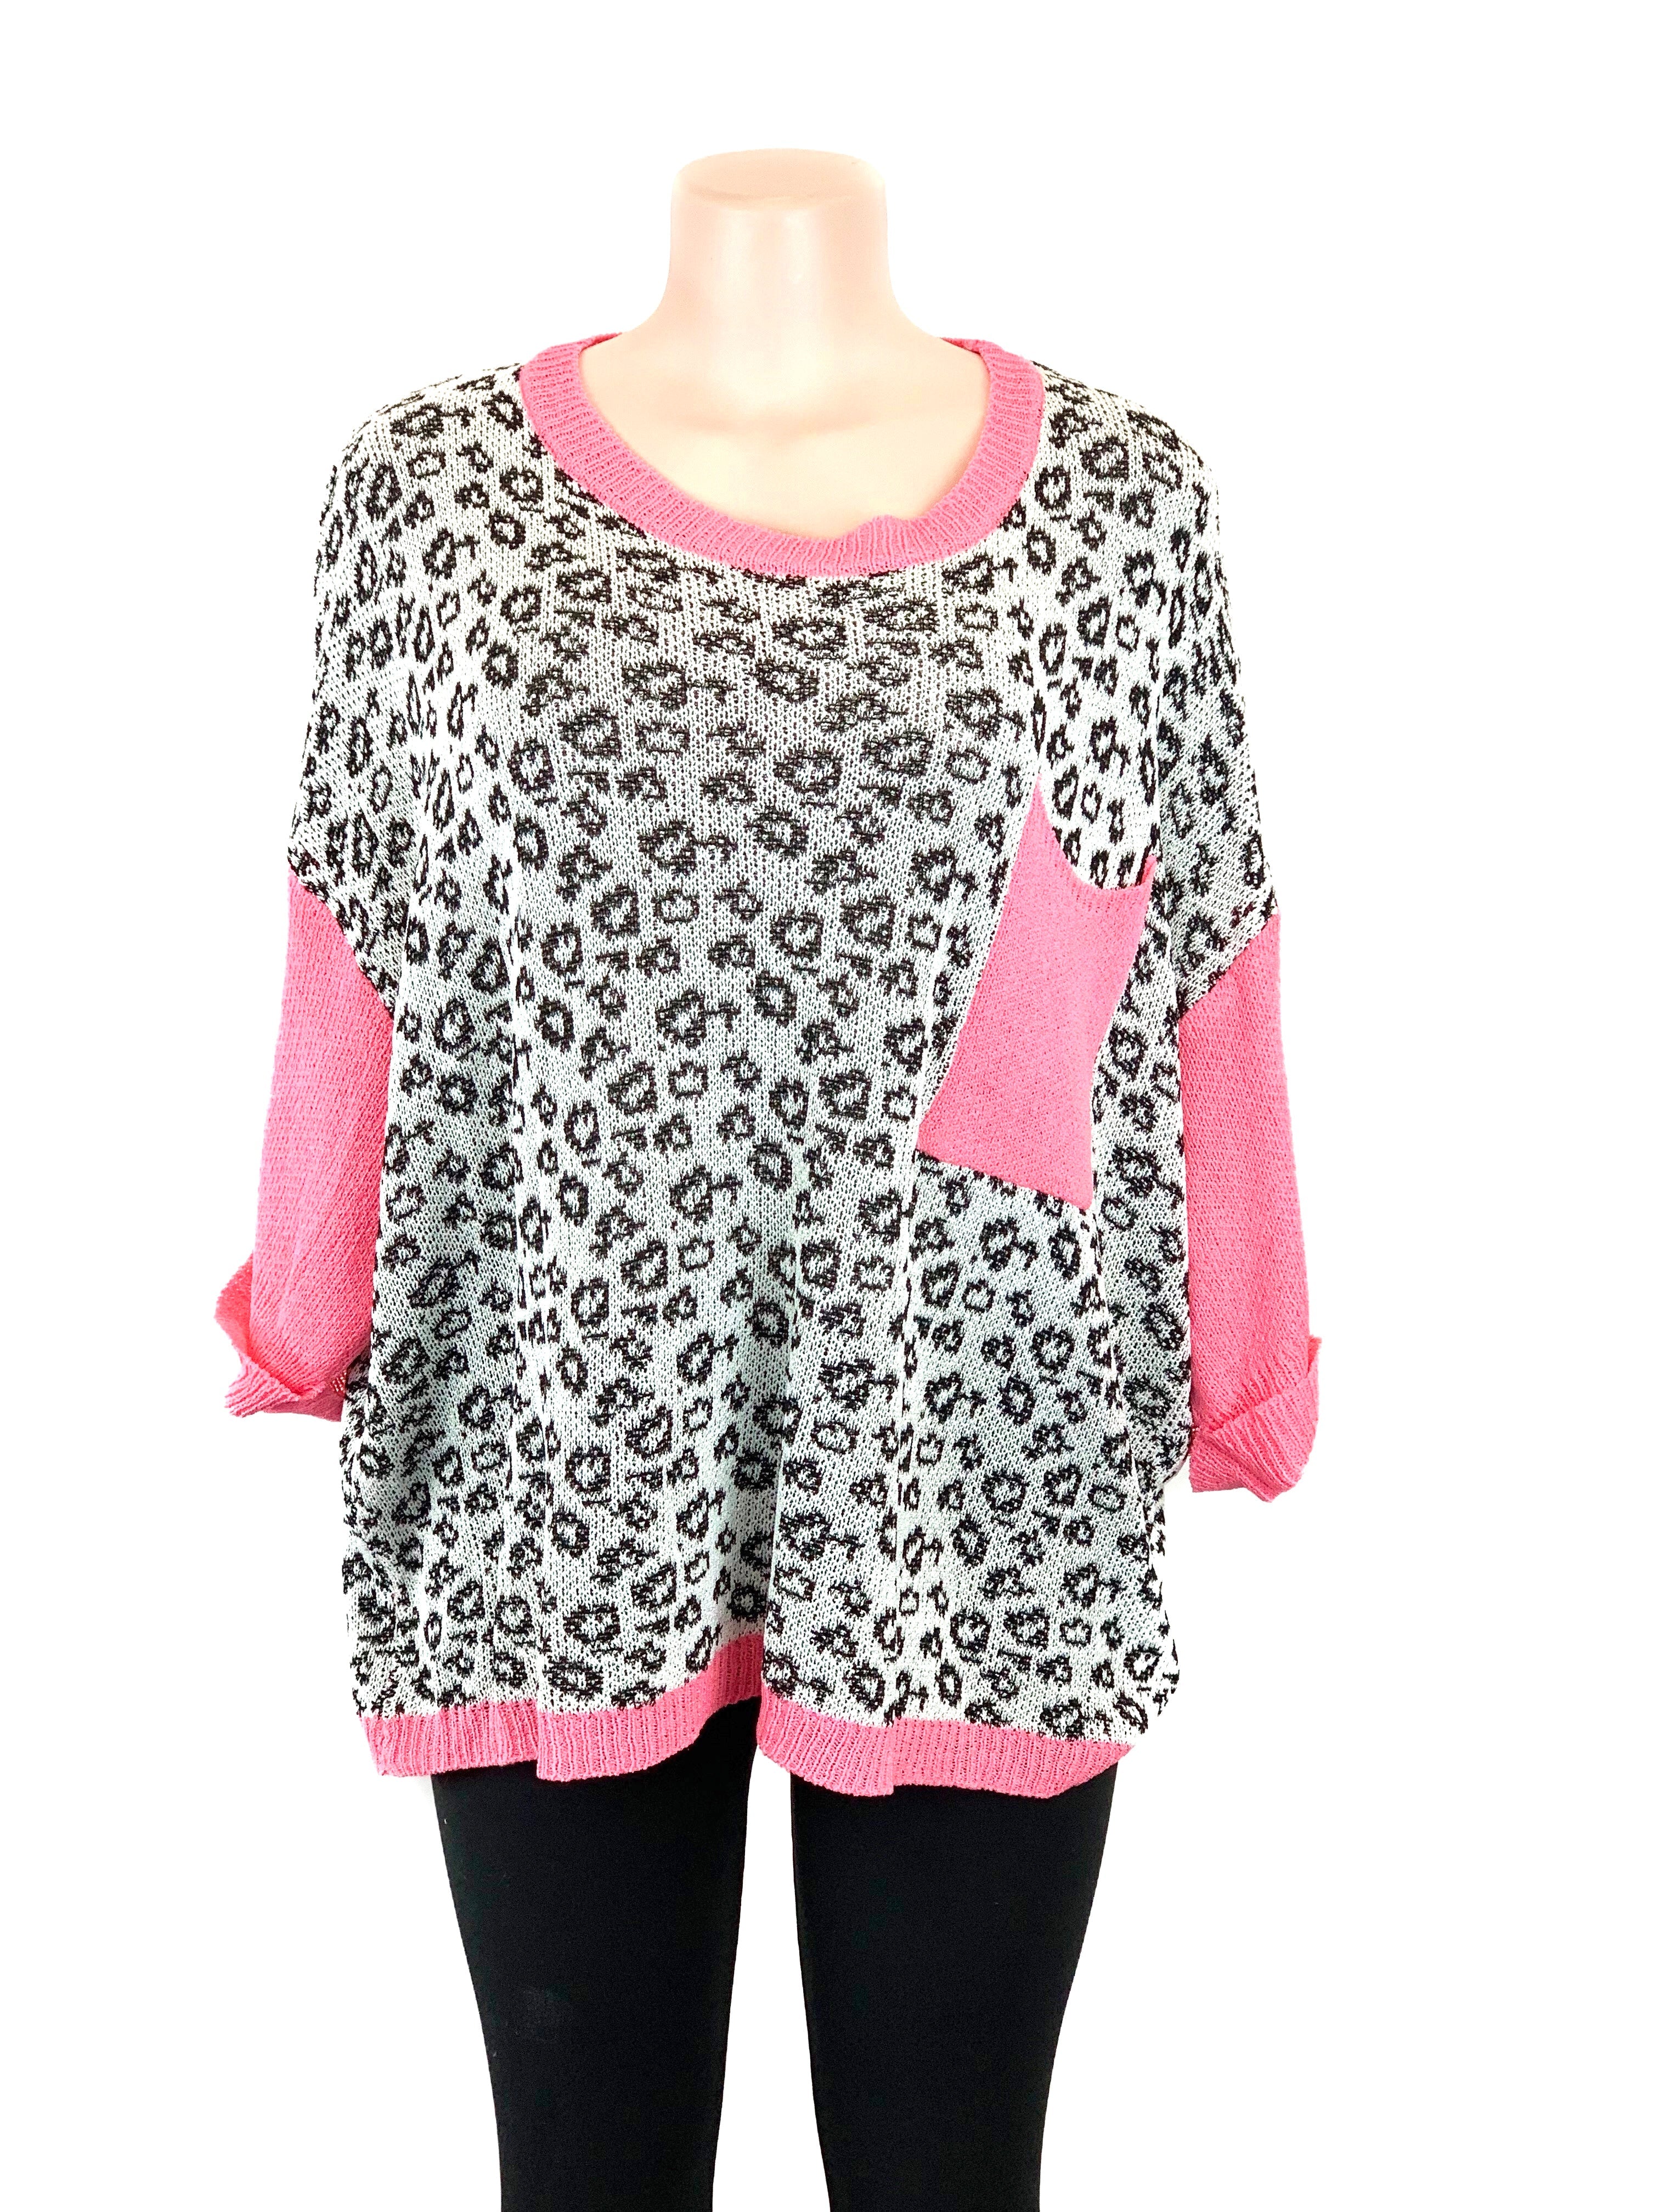 Medium Weight Pink Cheetah Print Gauze Sweater - 0